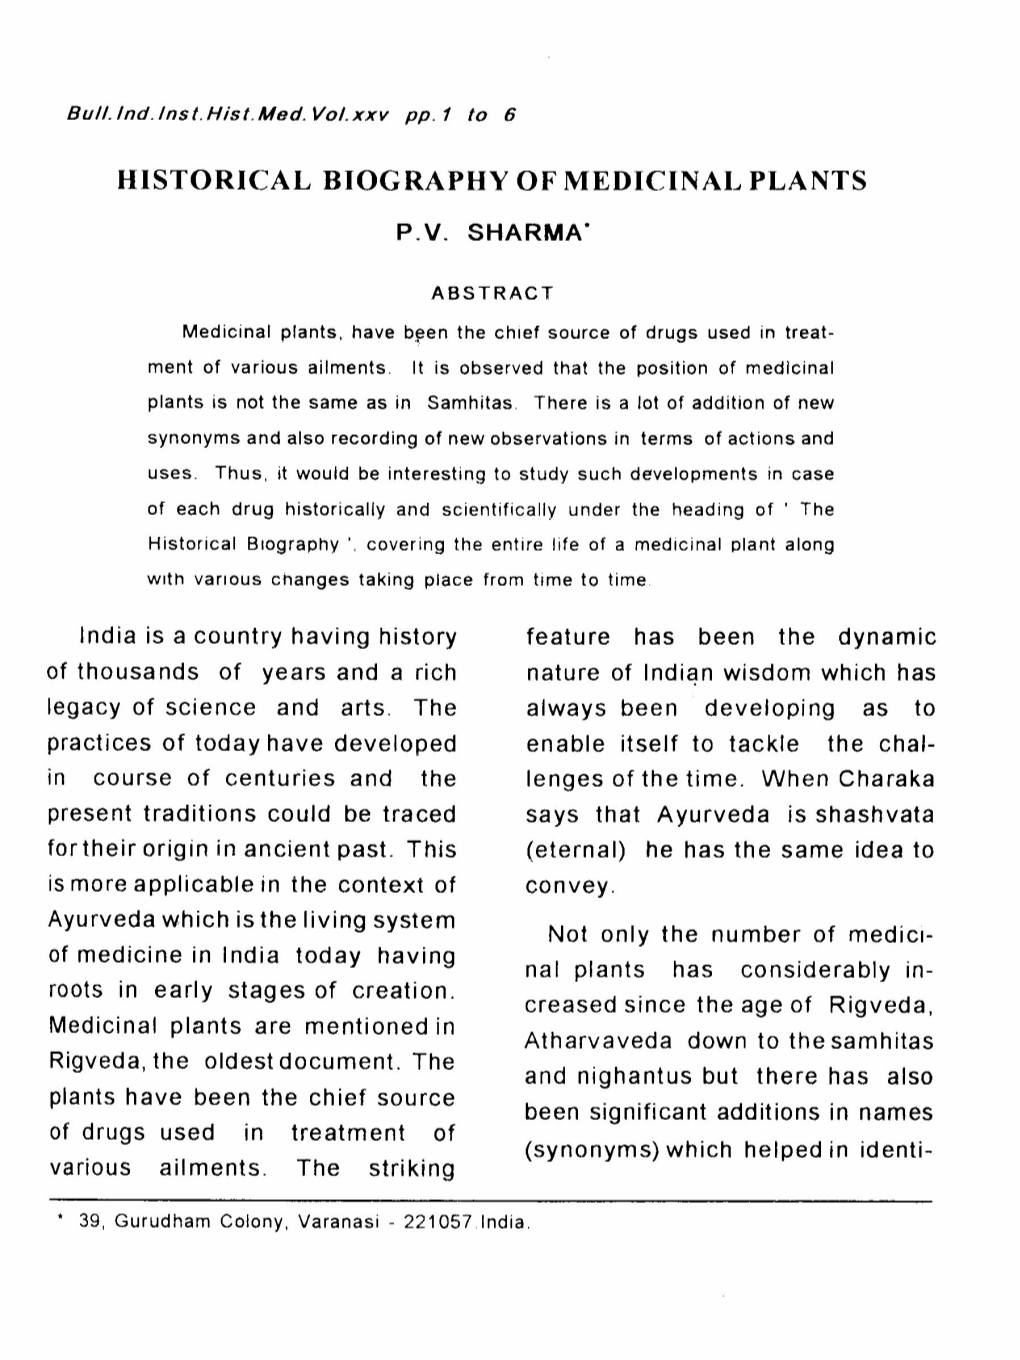 Historical Biography of Medicinal Plants